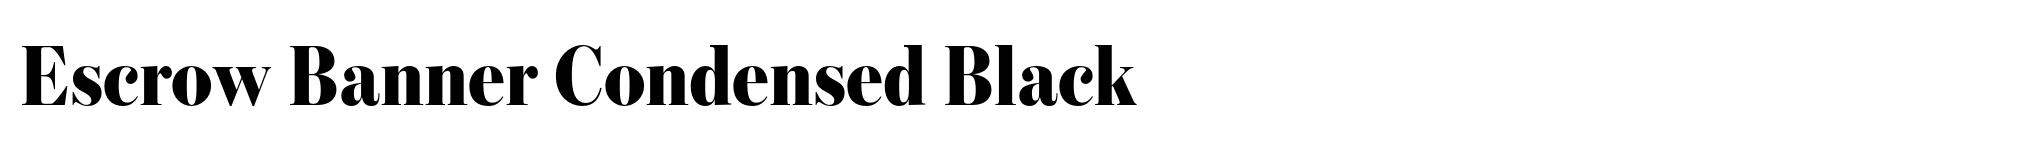 Escrow Banner Condensed Black image